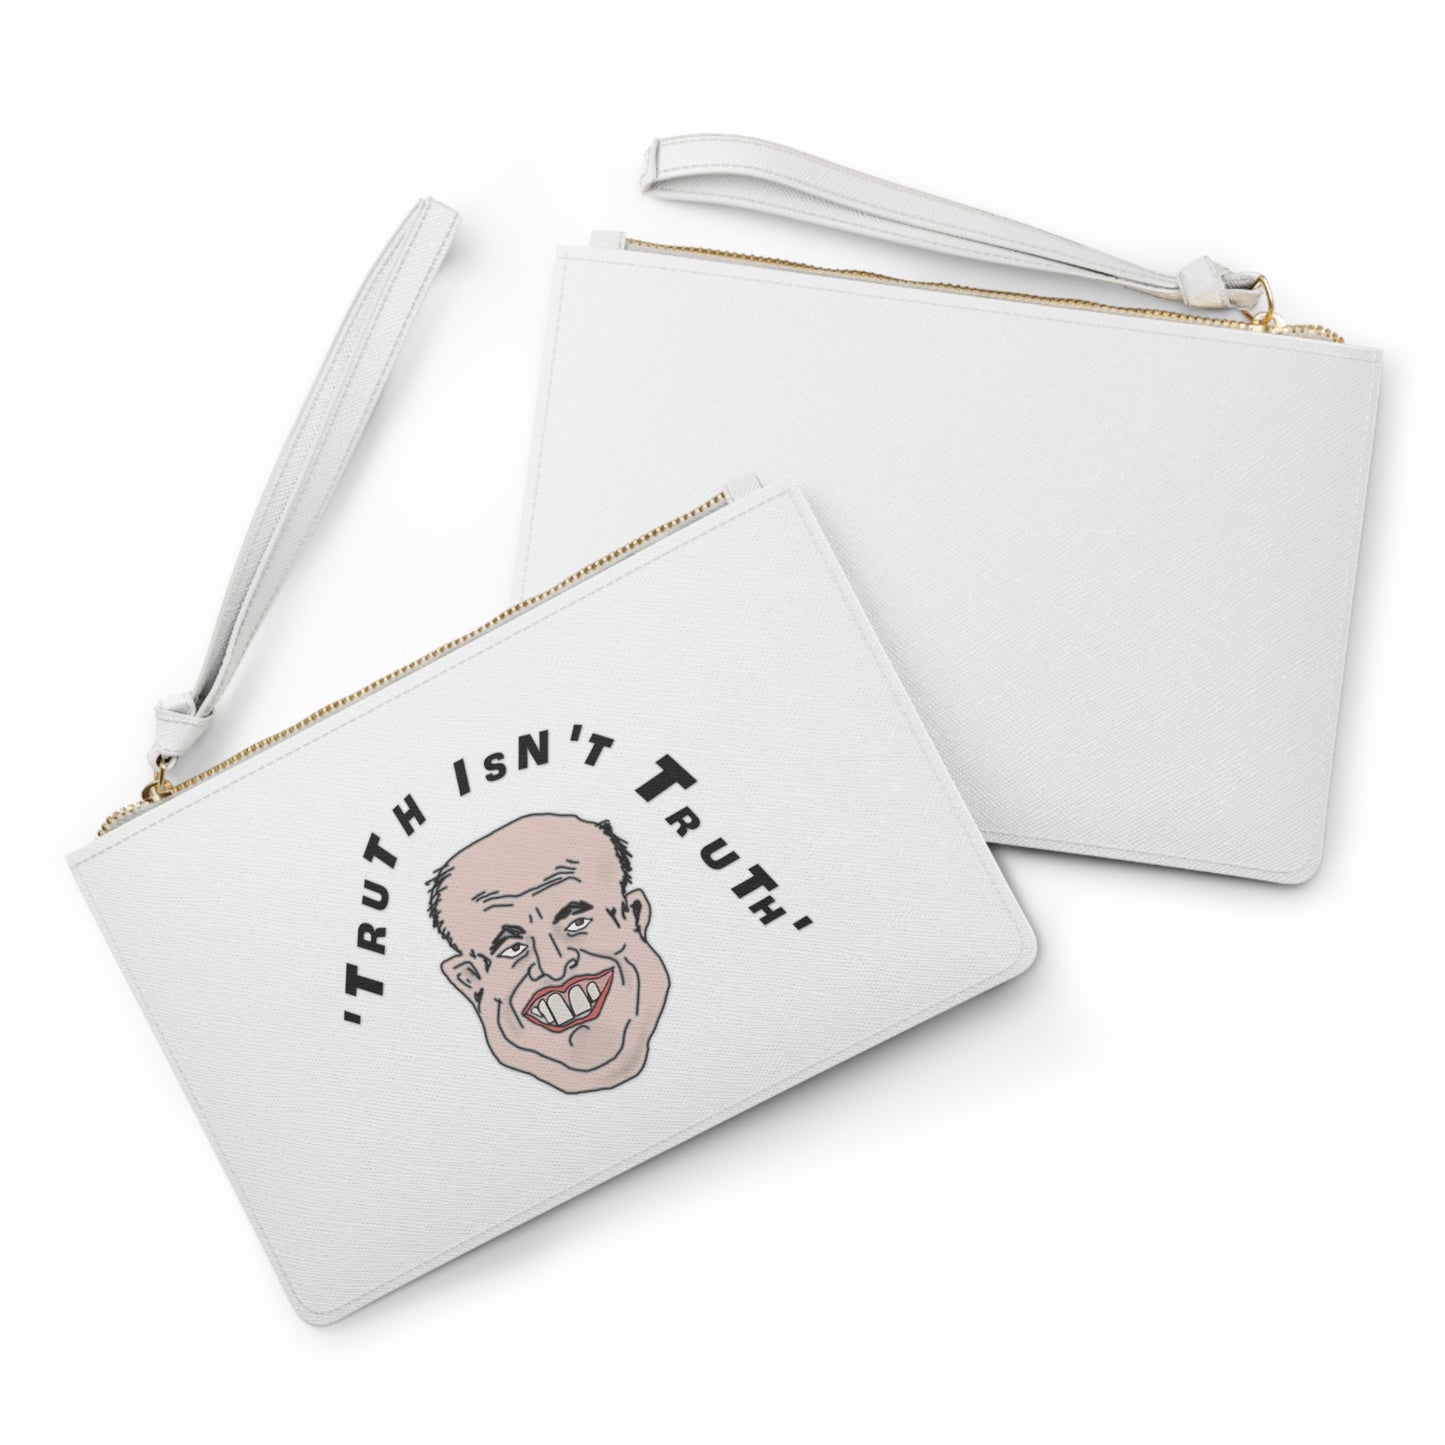 Rudy's Truth Clutch Bag